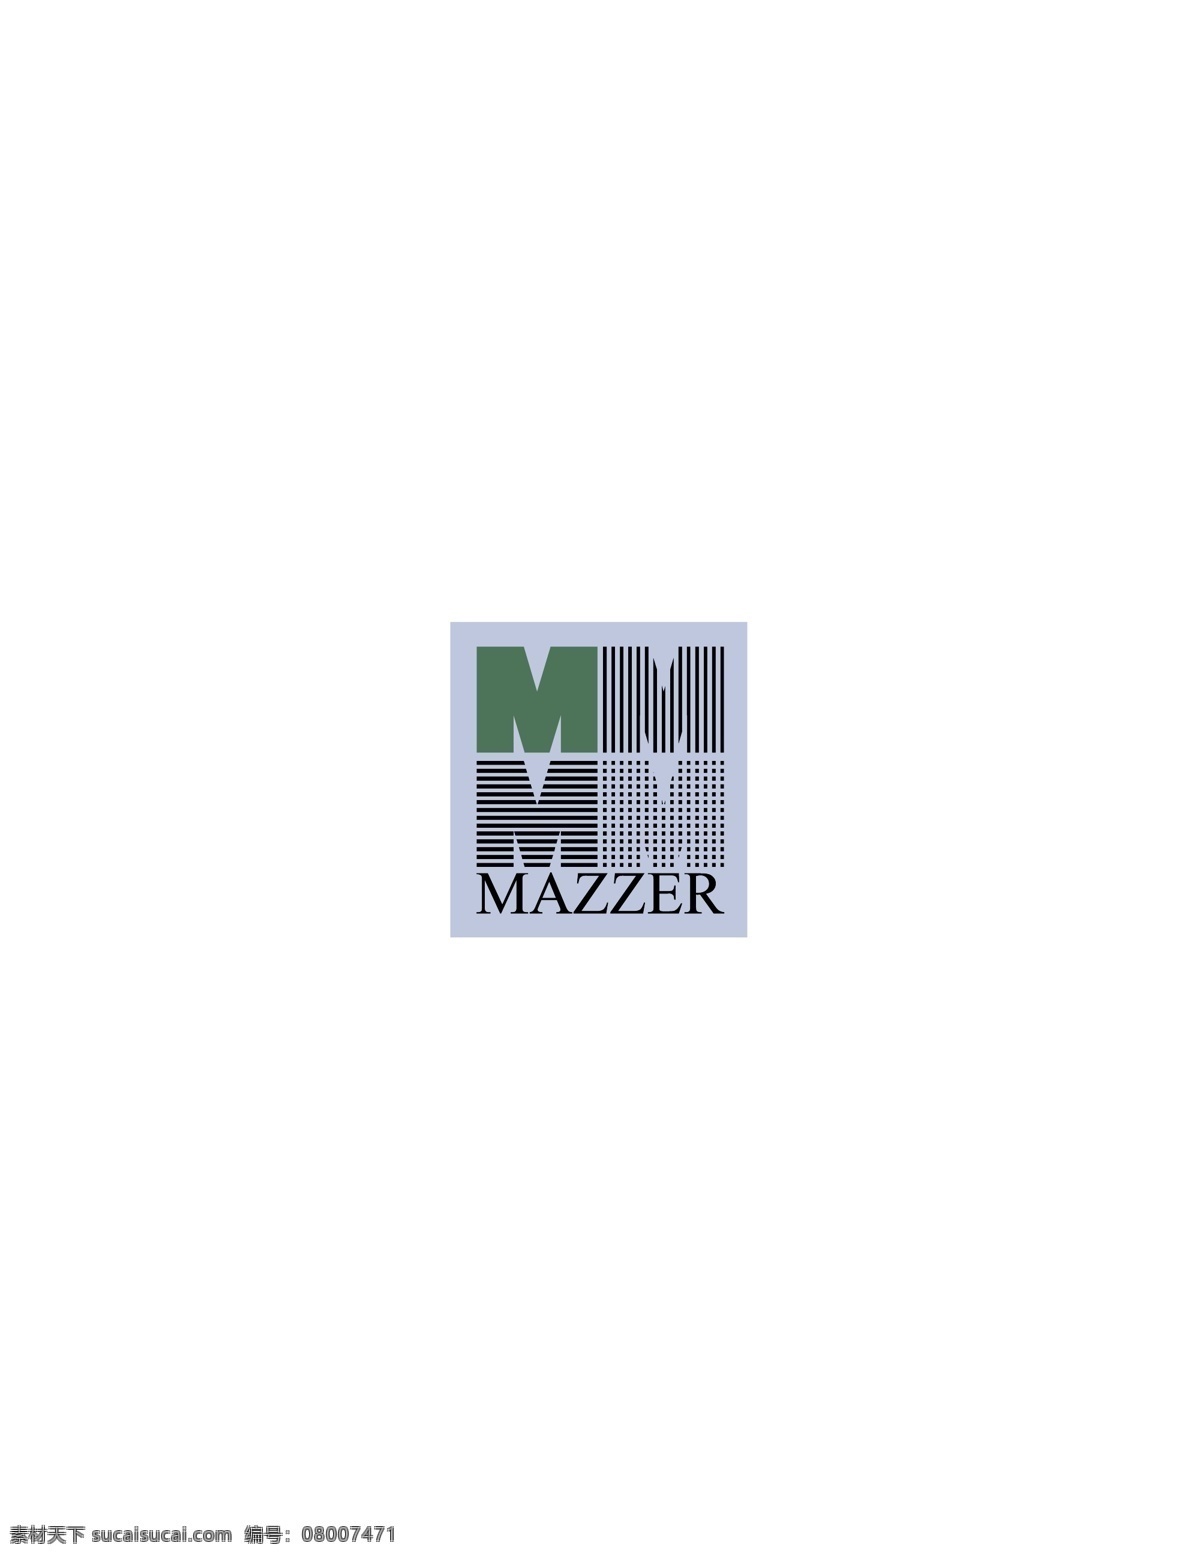 mazze logo大全 logo 设计欣赏 商业矢量 矢量下载 食物 品牌 标志 标志设计 欣赏 网页矢量 矢量图 其他矢量图